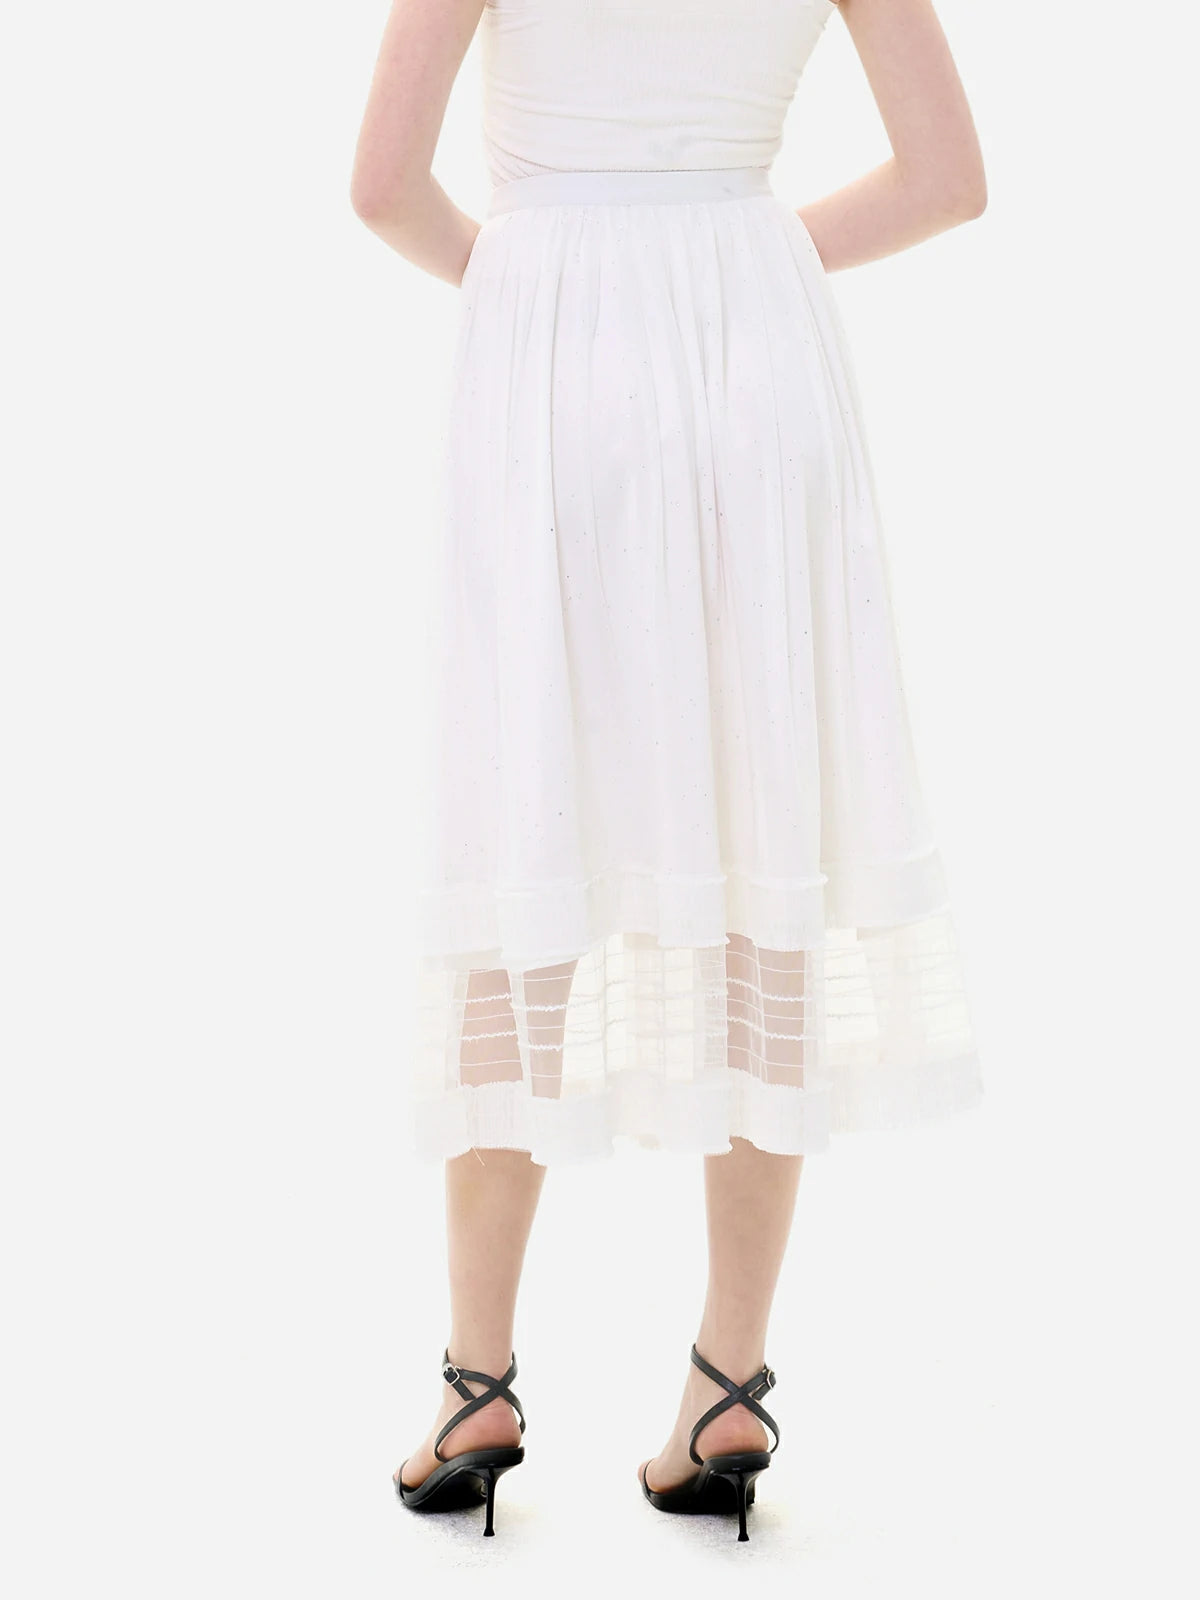 Comfortable white midi skirt with elastic design